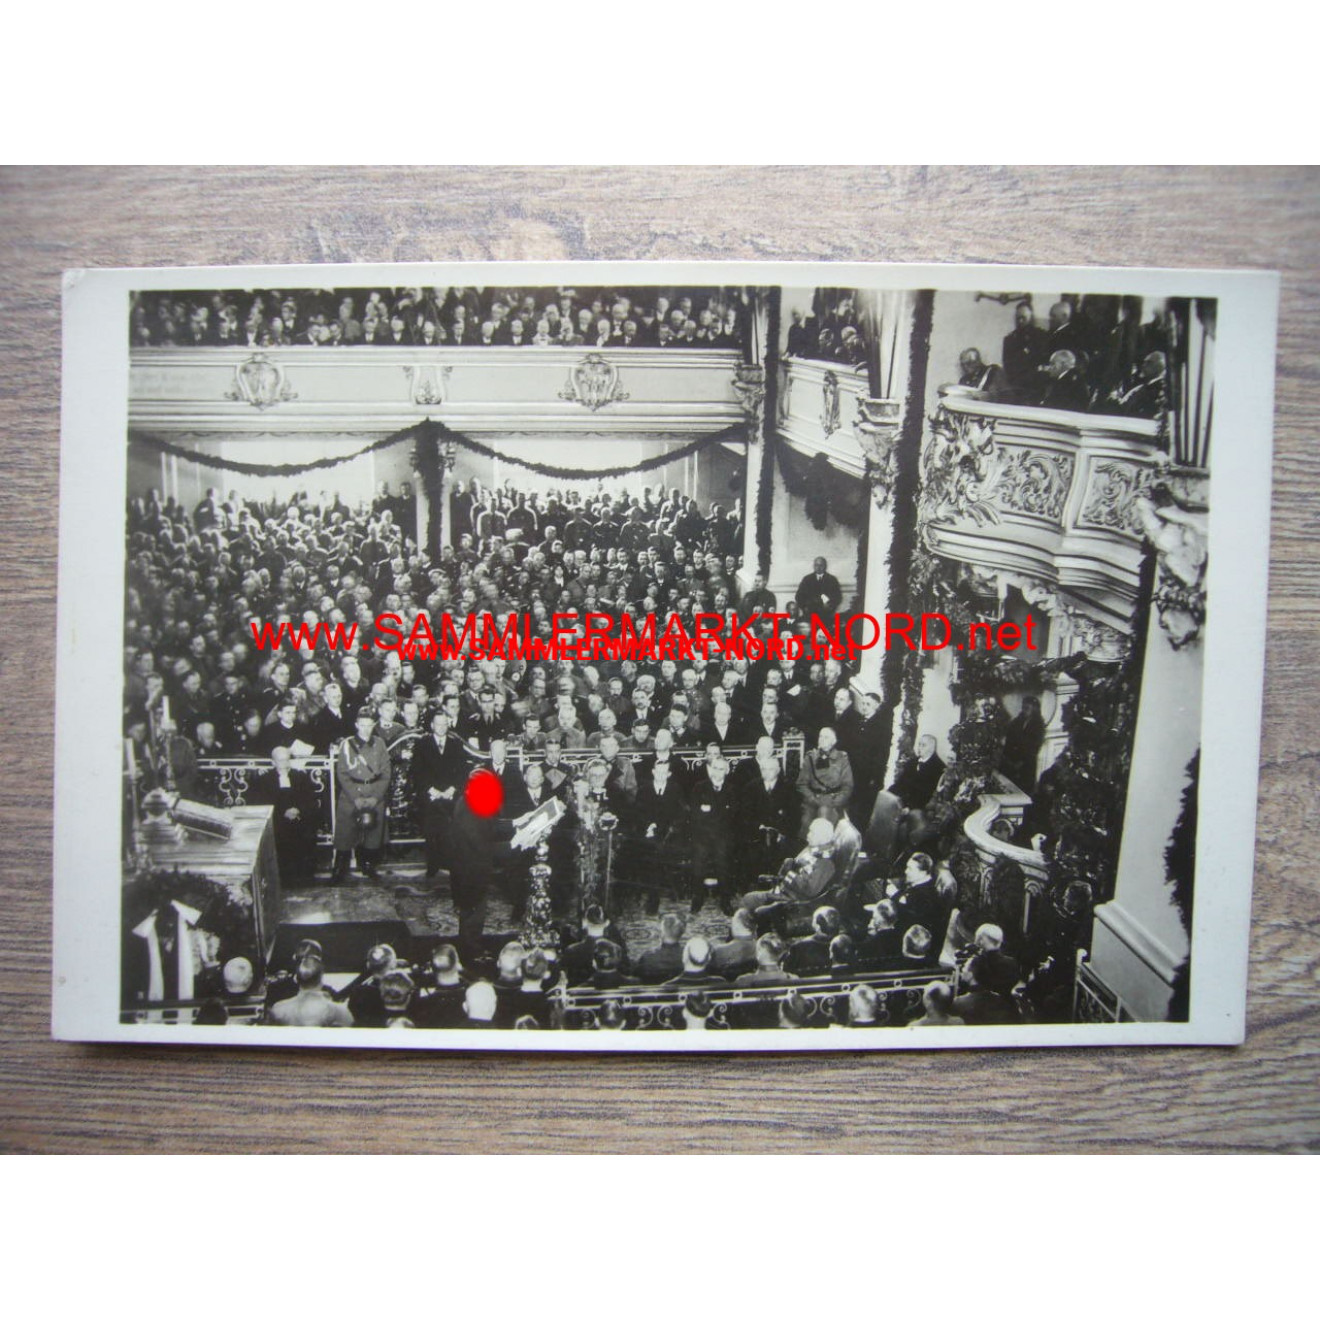 Speech by Hitler in Potsdam - postcard